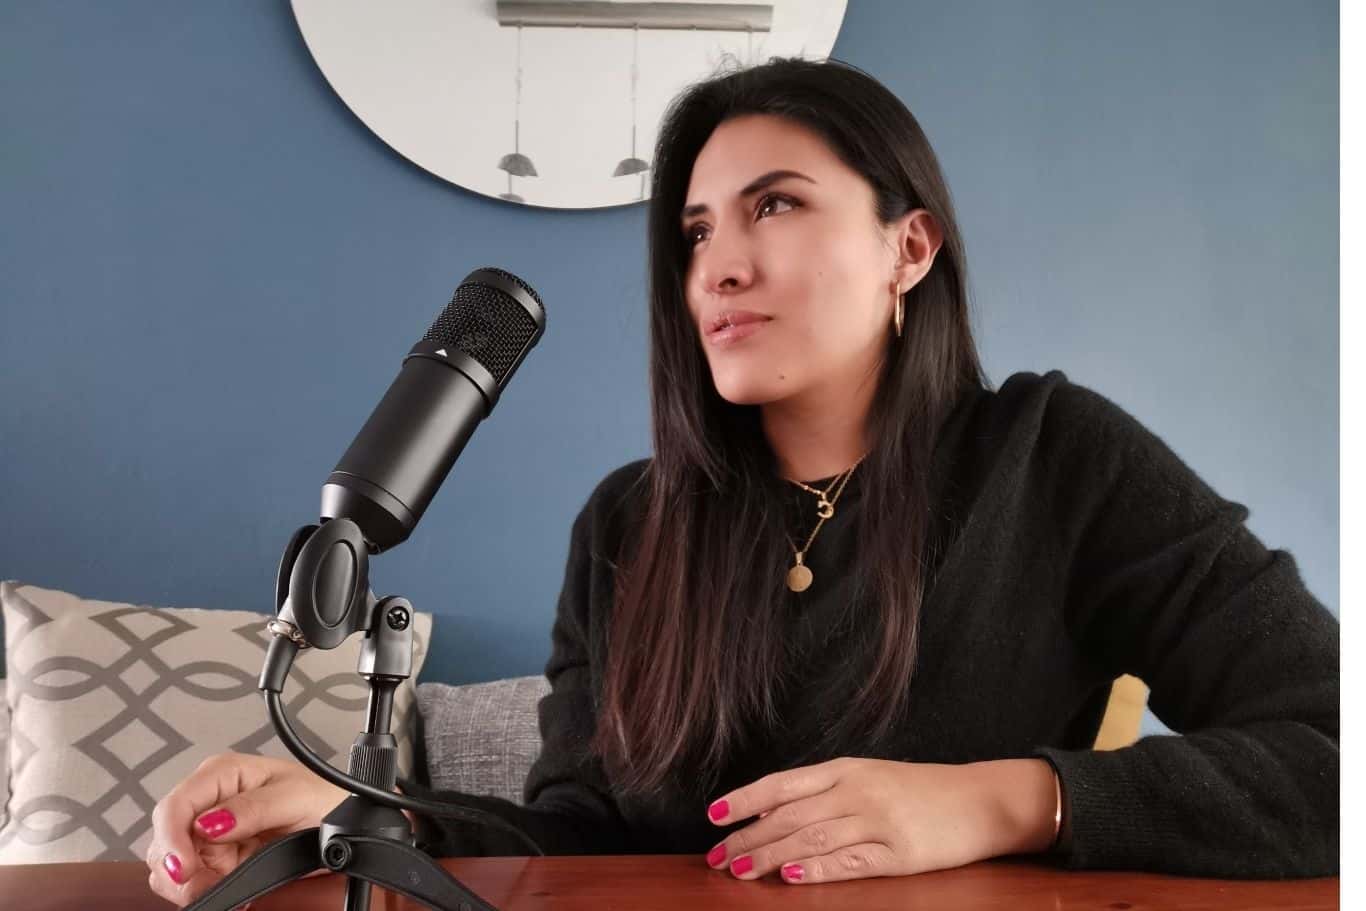 Podcast "Treinta me di cuenta" por Citlalli Barraza y Jimena Jiménez 